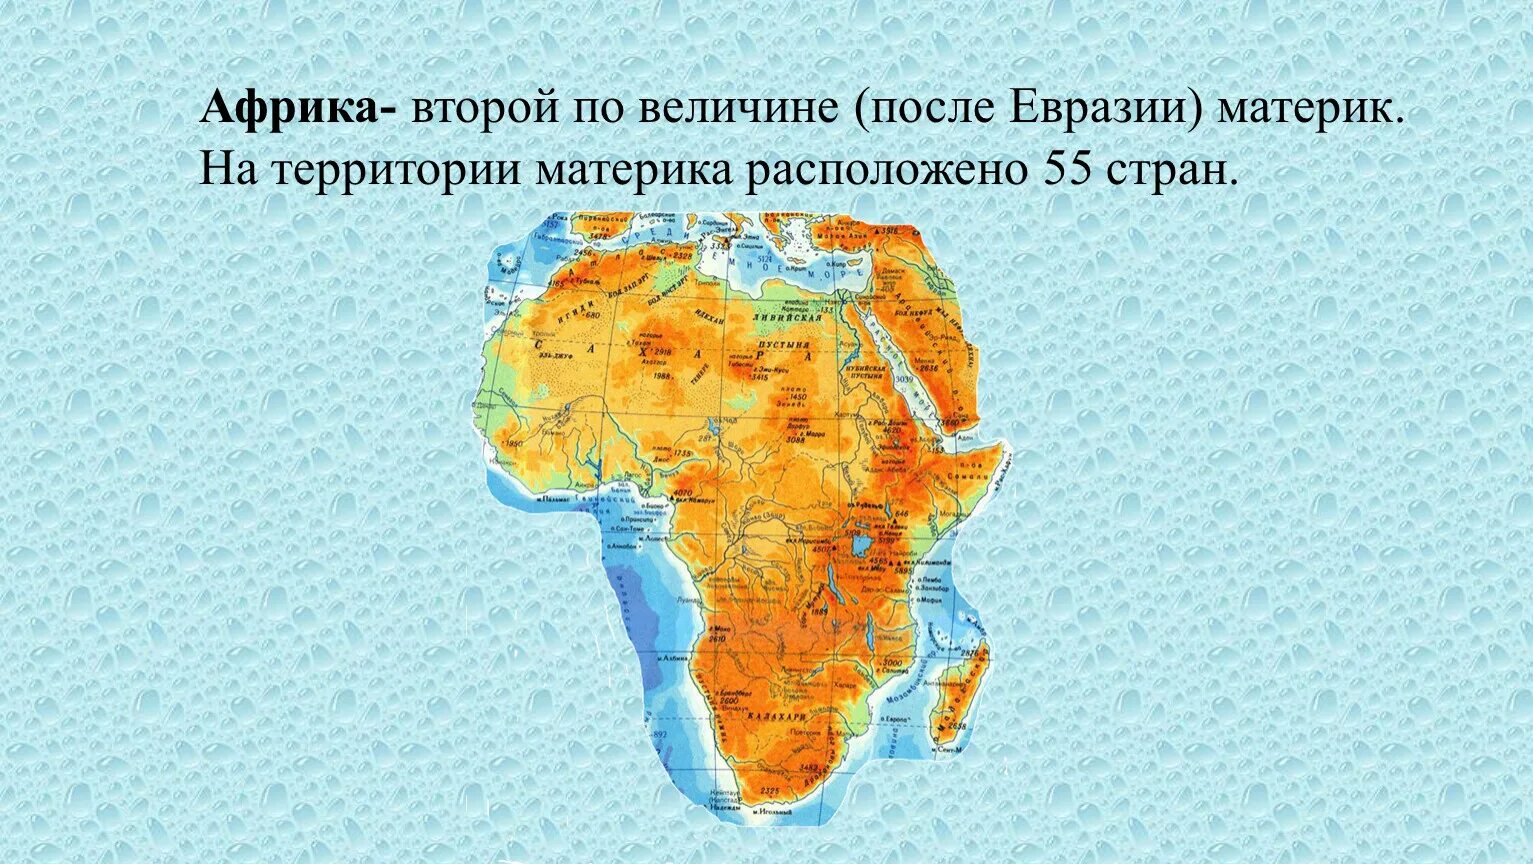 Africa text. Карта Африки. Африка материк. Материк Африка на карте. Карта африканского континента.